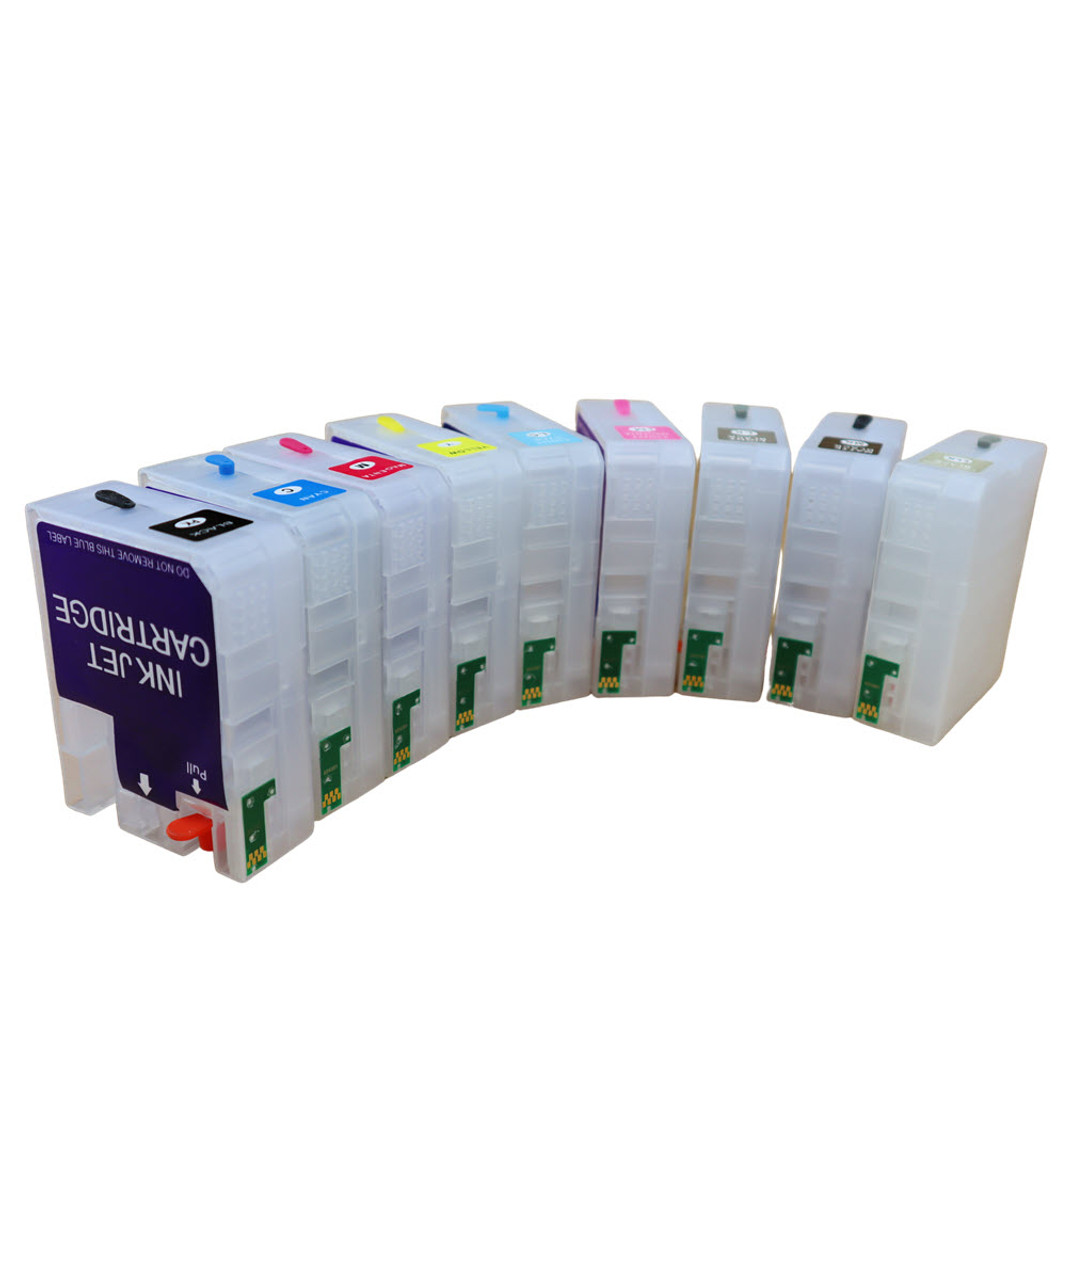 9 Refillable Ink Cartridges 80ml each (empty) for Epson Stylus Pro 3880 Printer